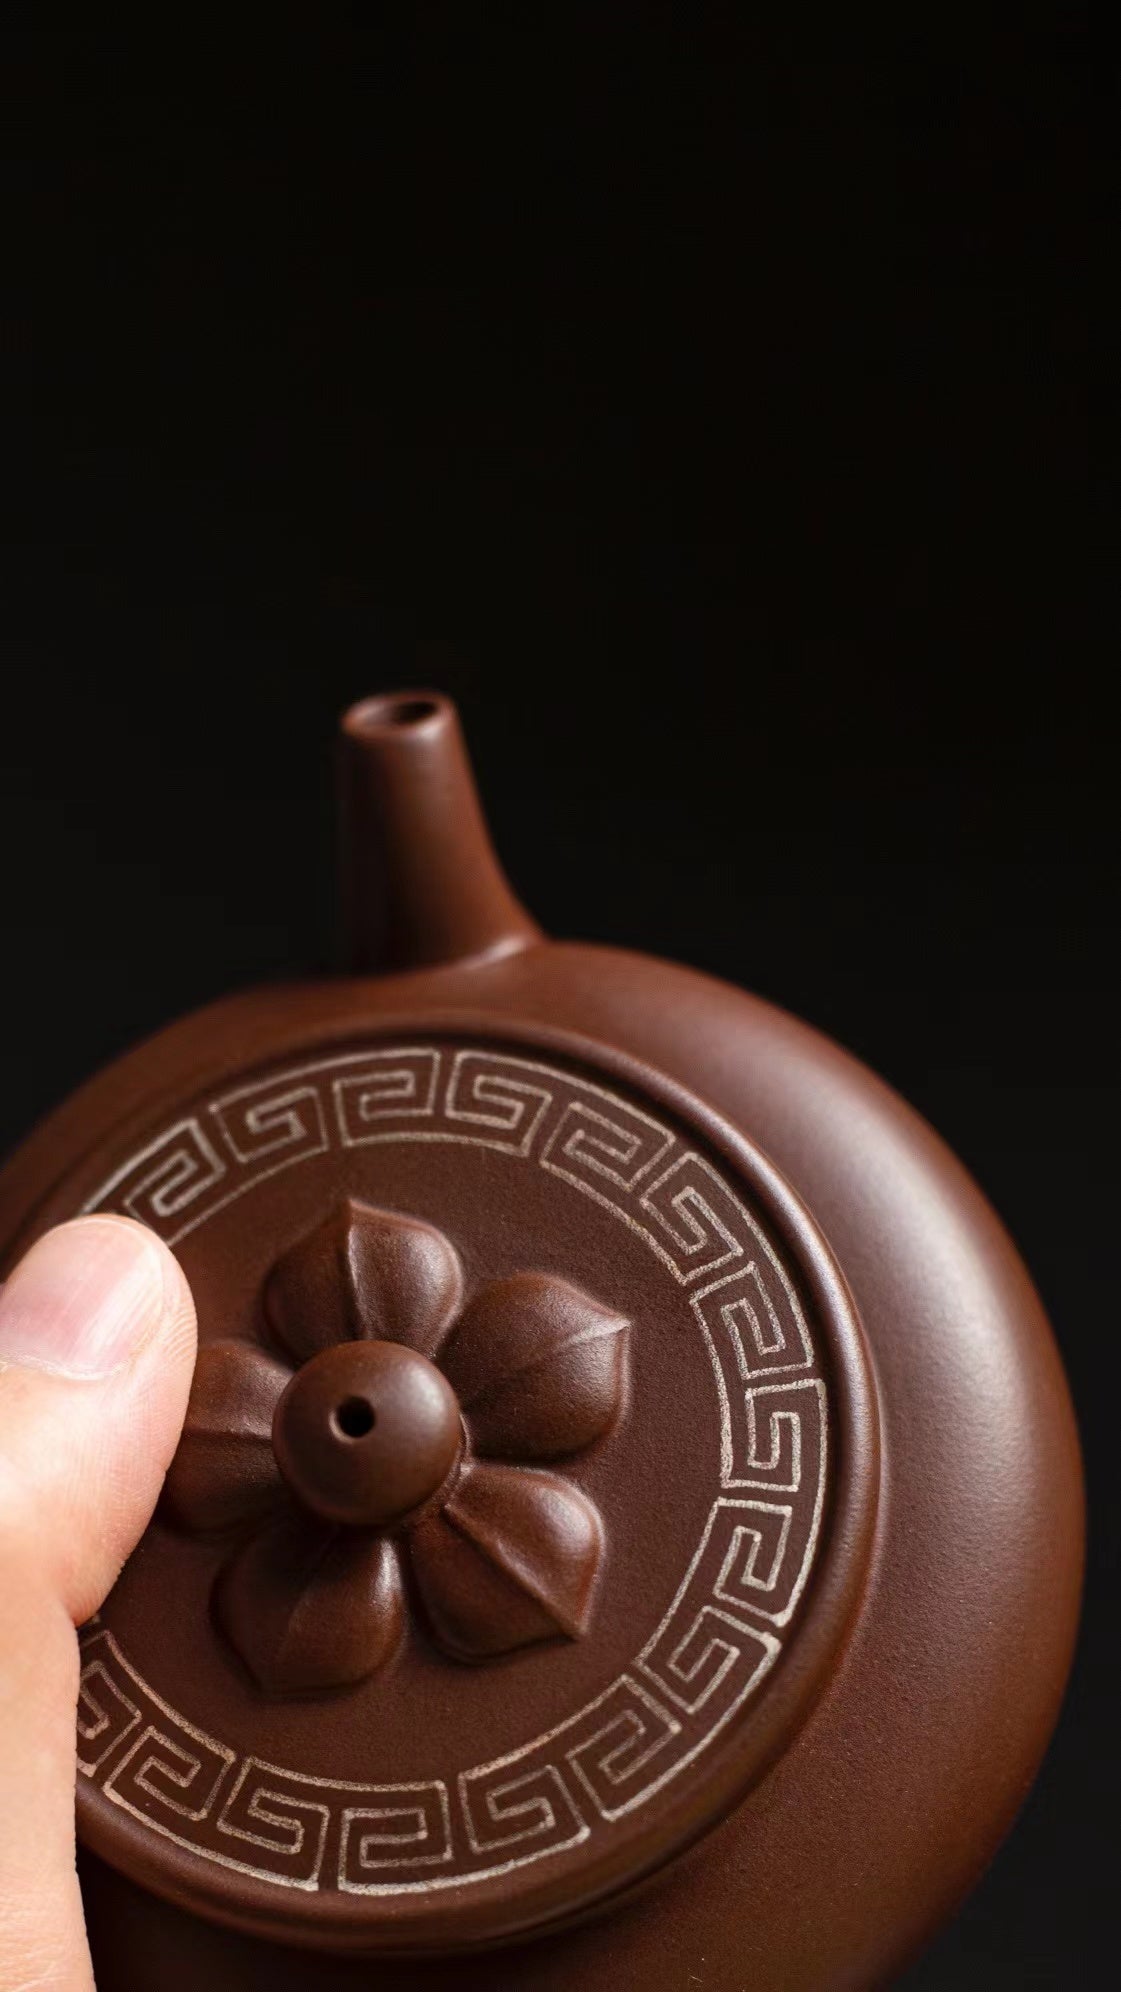 Ru Hui Teapot